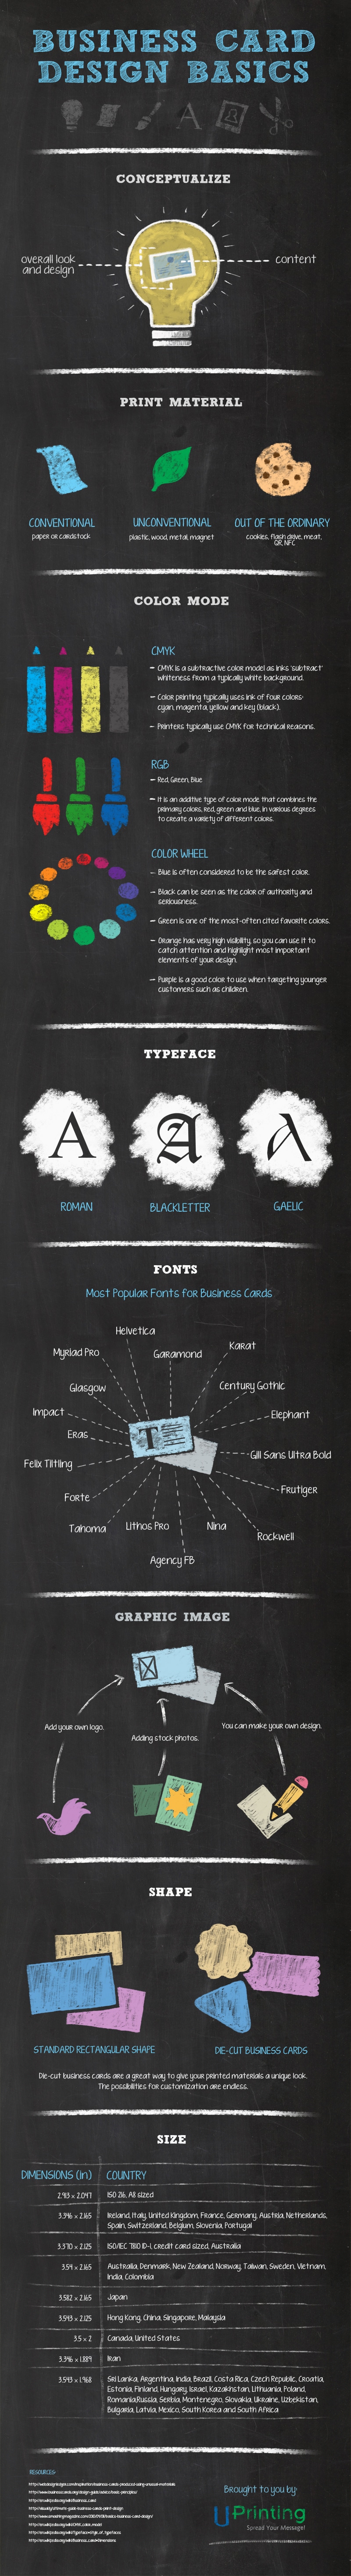 business-card-design-basics-infographic